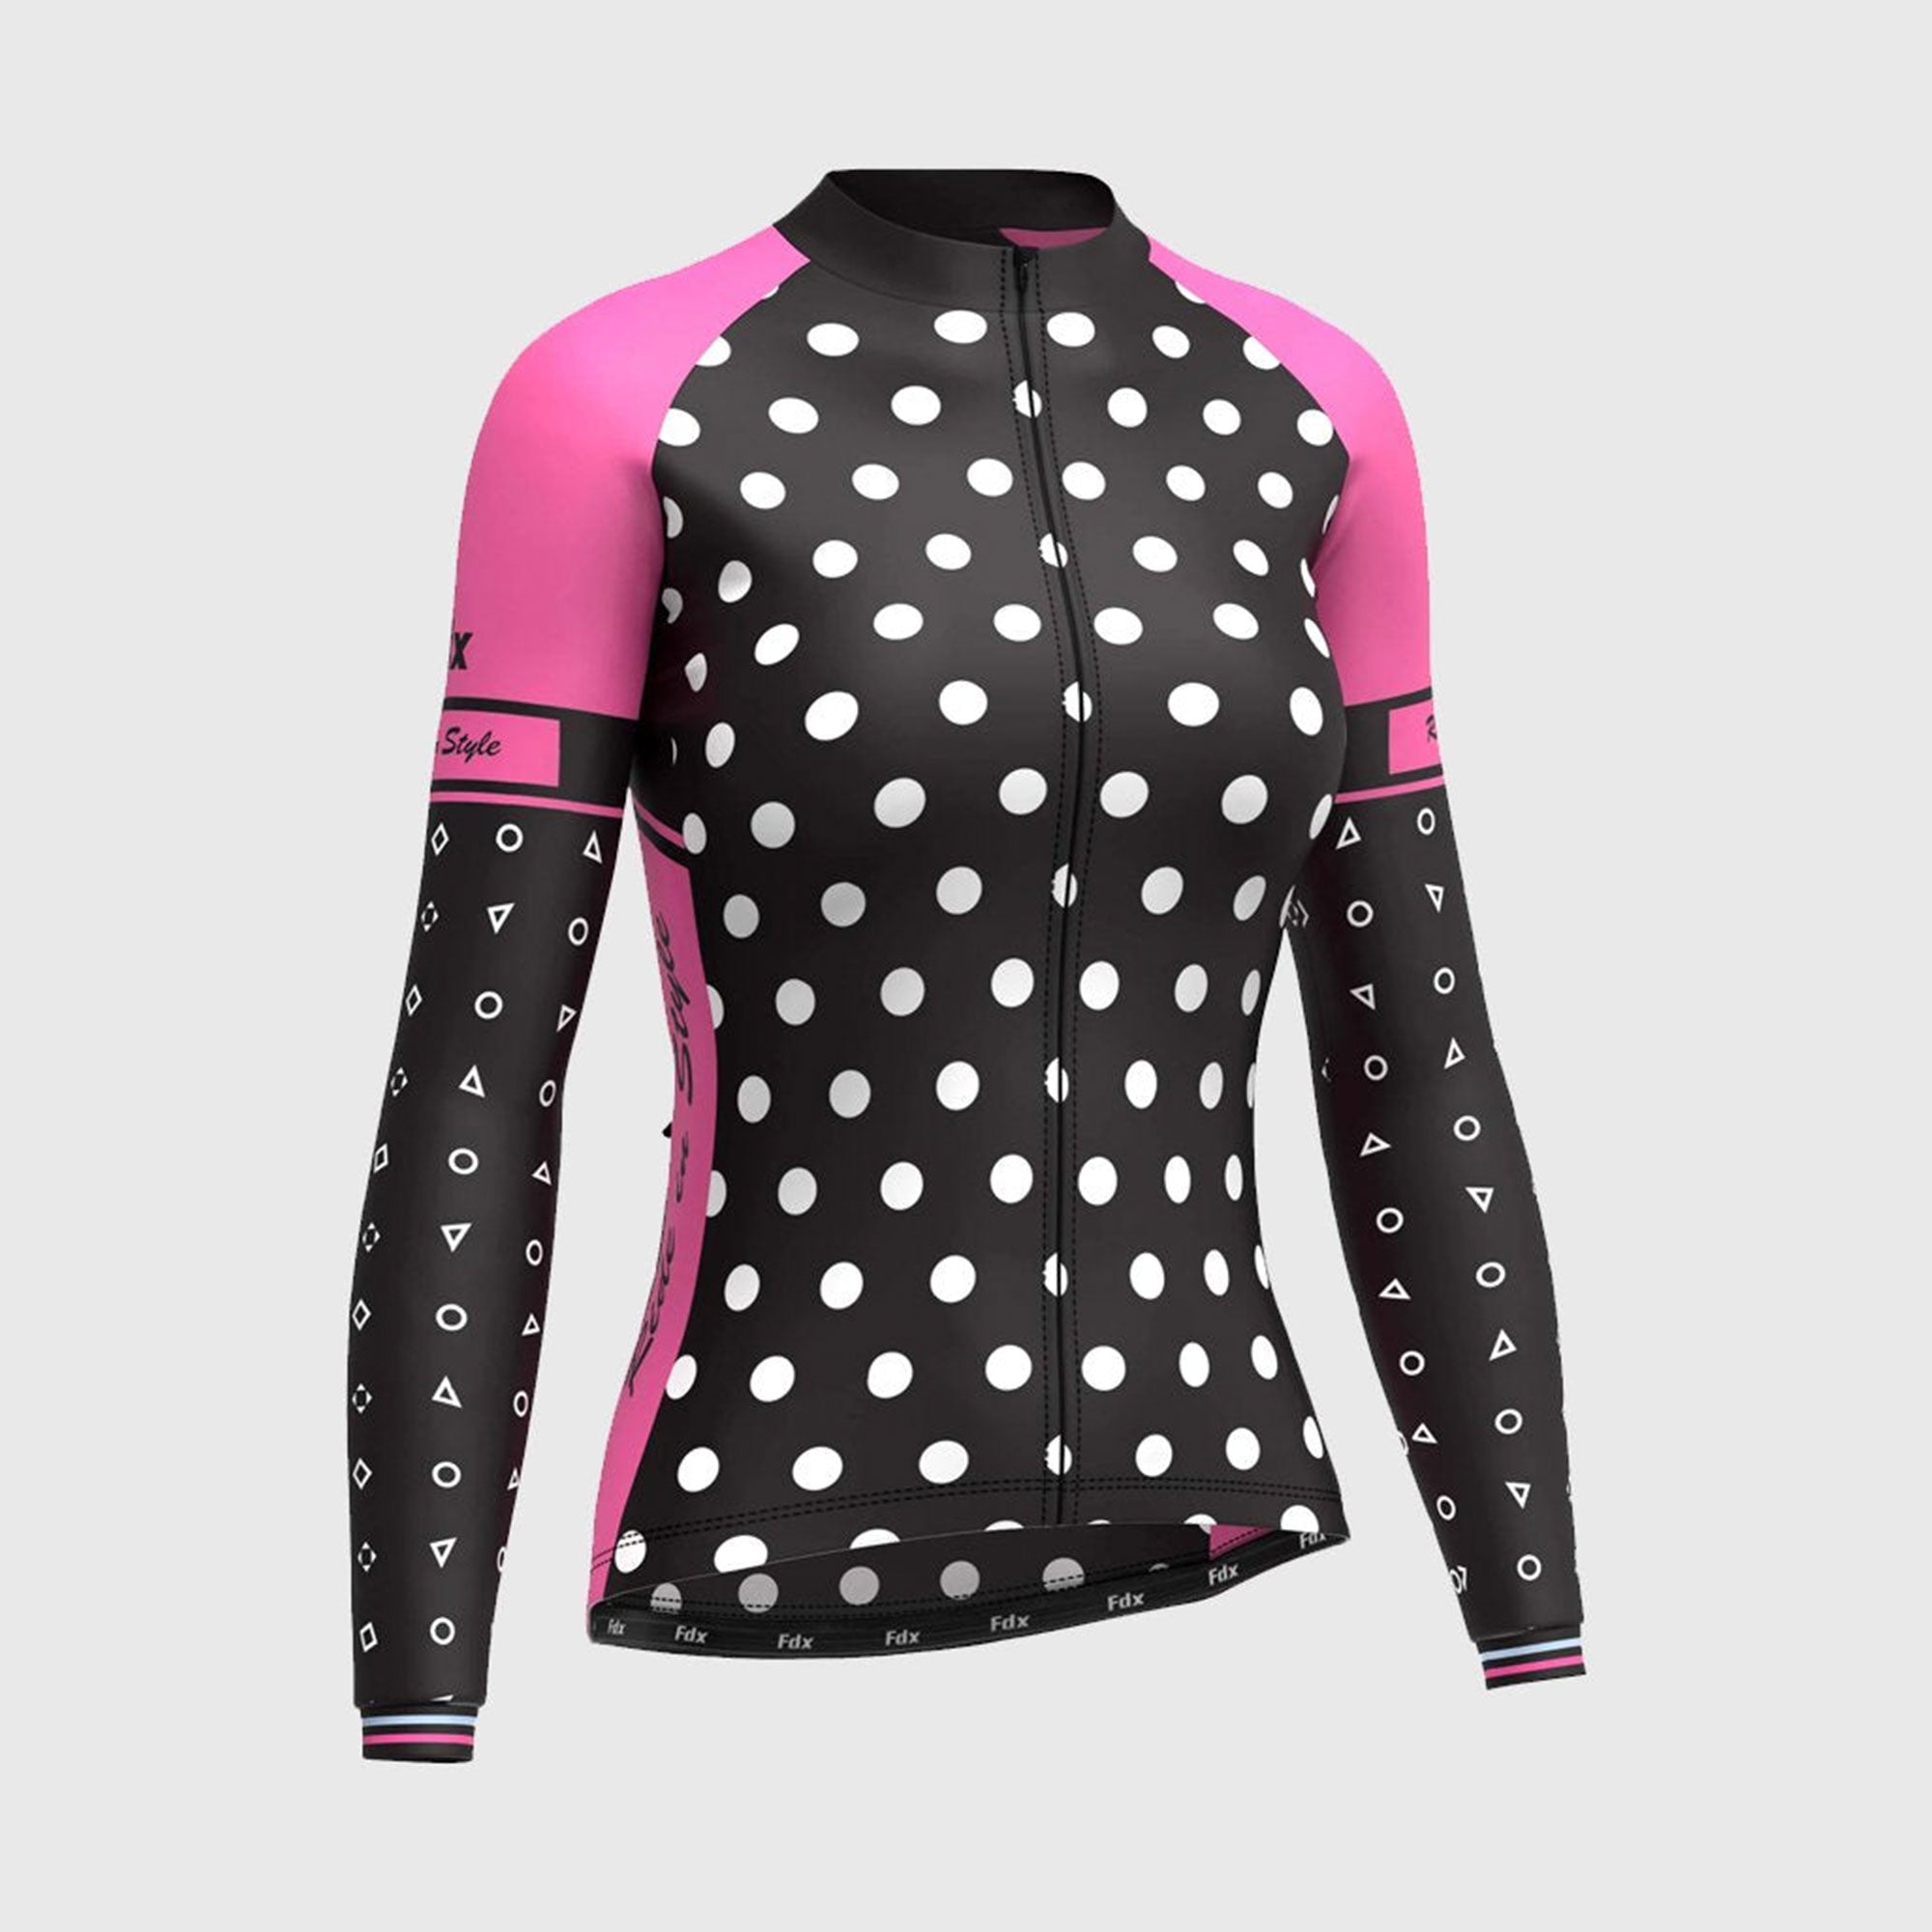 FDX Best Women's Black & Pink Long Sleeve Cycling Jersey for Winter Roubaix Thermal Fleece Shirt Road Bike Wear Top Full Zipper, Lightweight  Pockets & Hi viz Reflectors - Polka